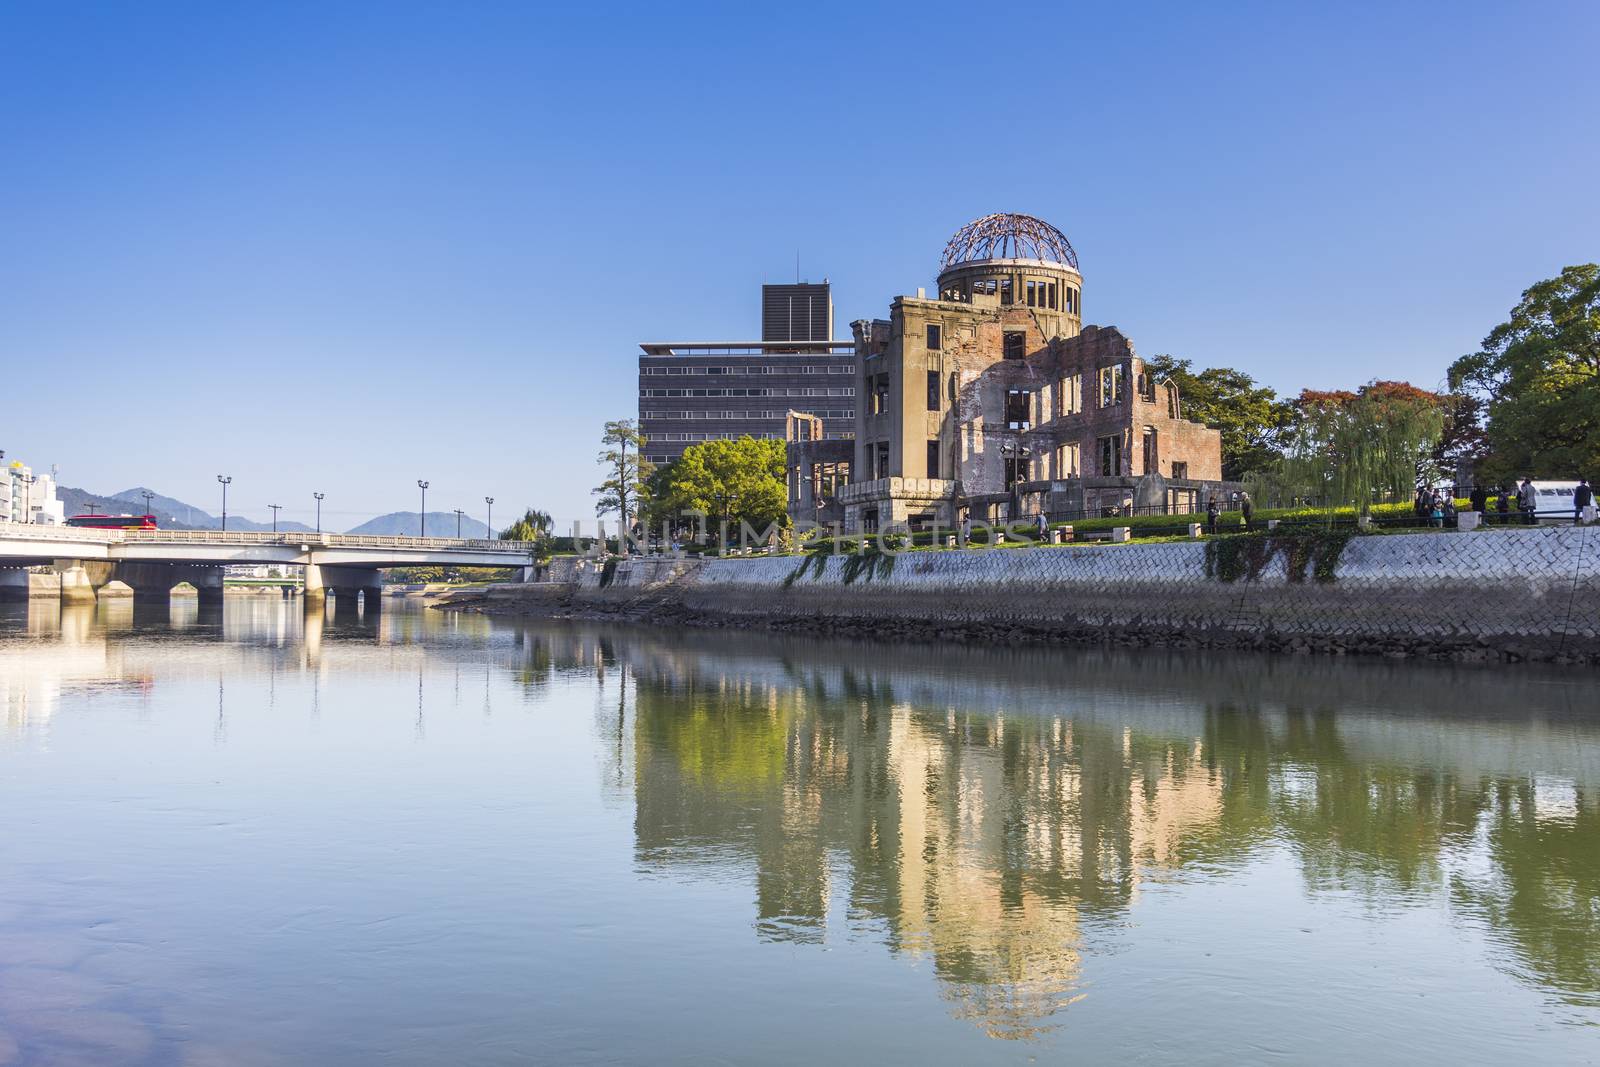 Atomic bomb dome. Hiroshima. Japan